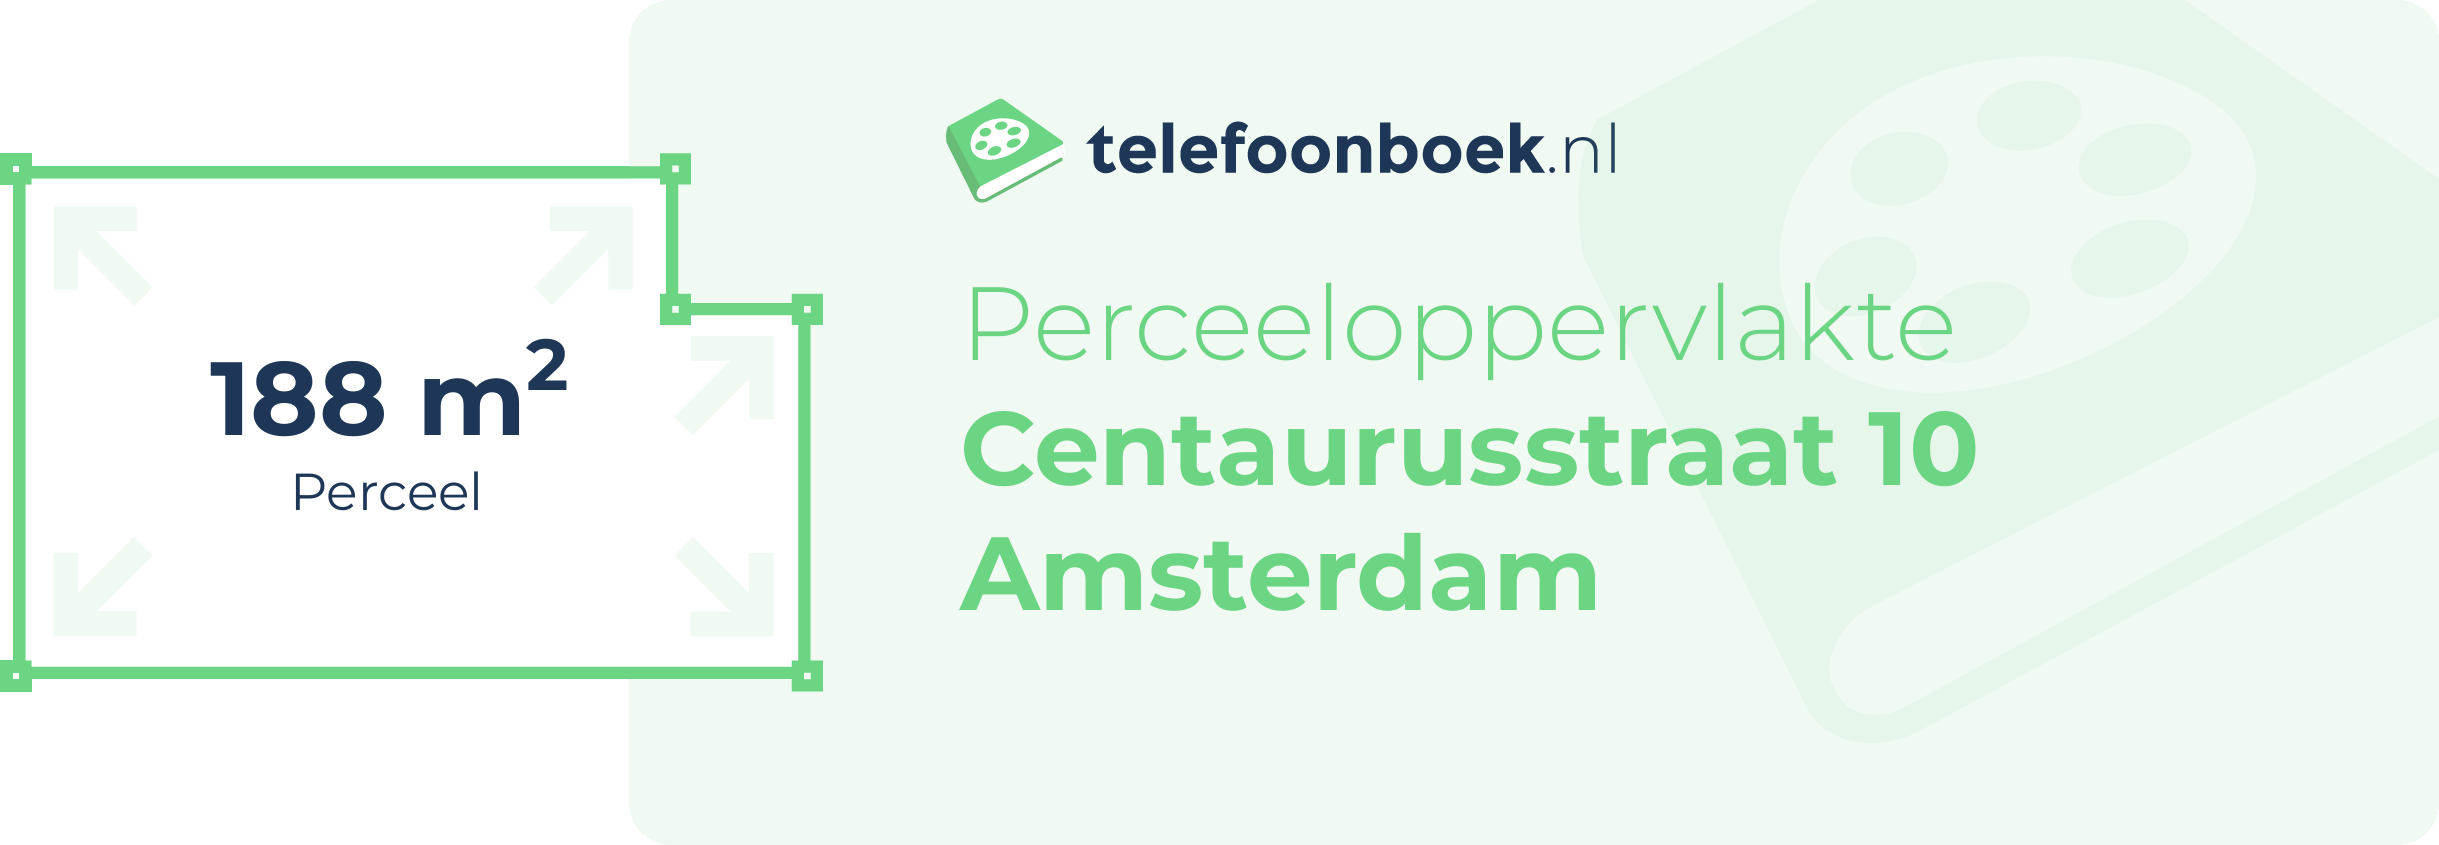 Perceeloppervlakte Centaurusstraat 10 Amsterdam